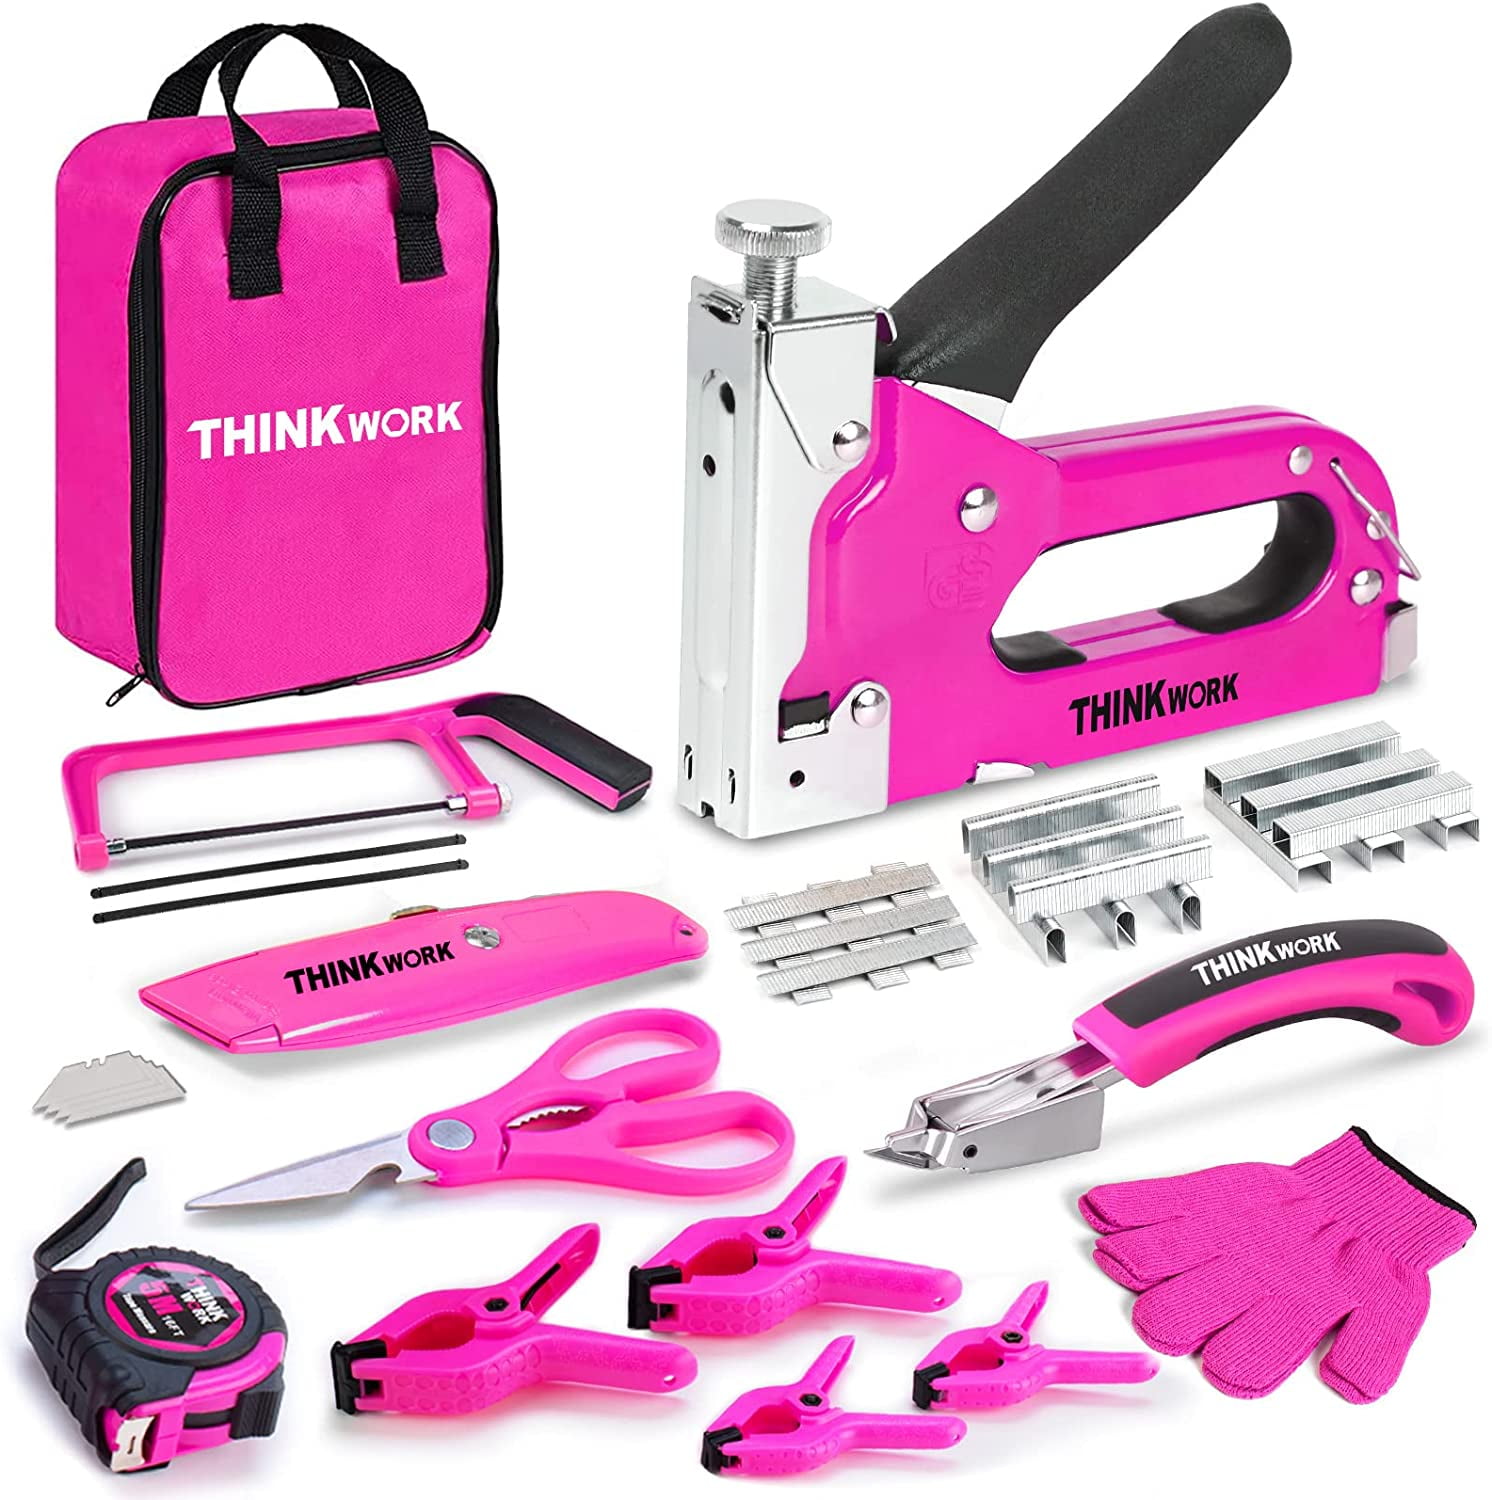 THINKWORK Pink Staple Gun Tool Set, 25 Piece Lady's Home Tool Kit